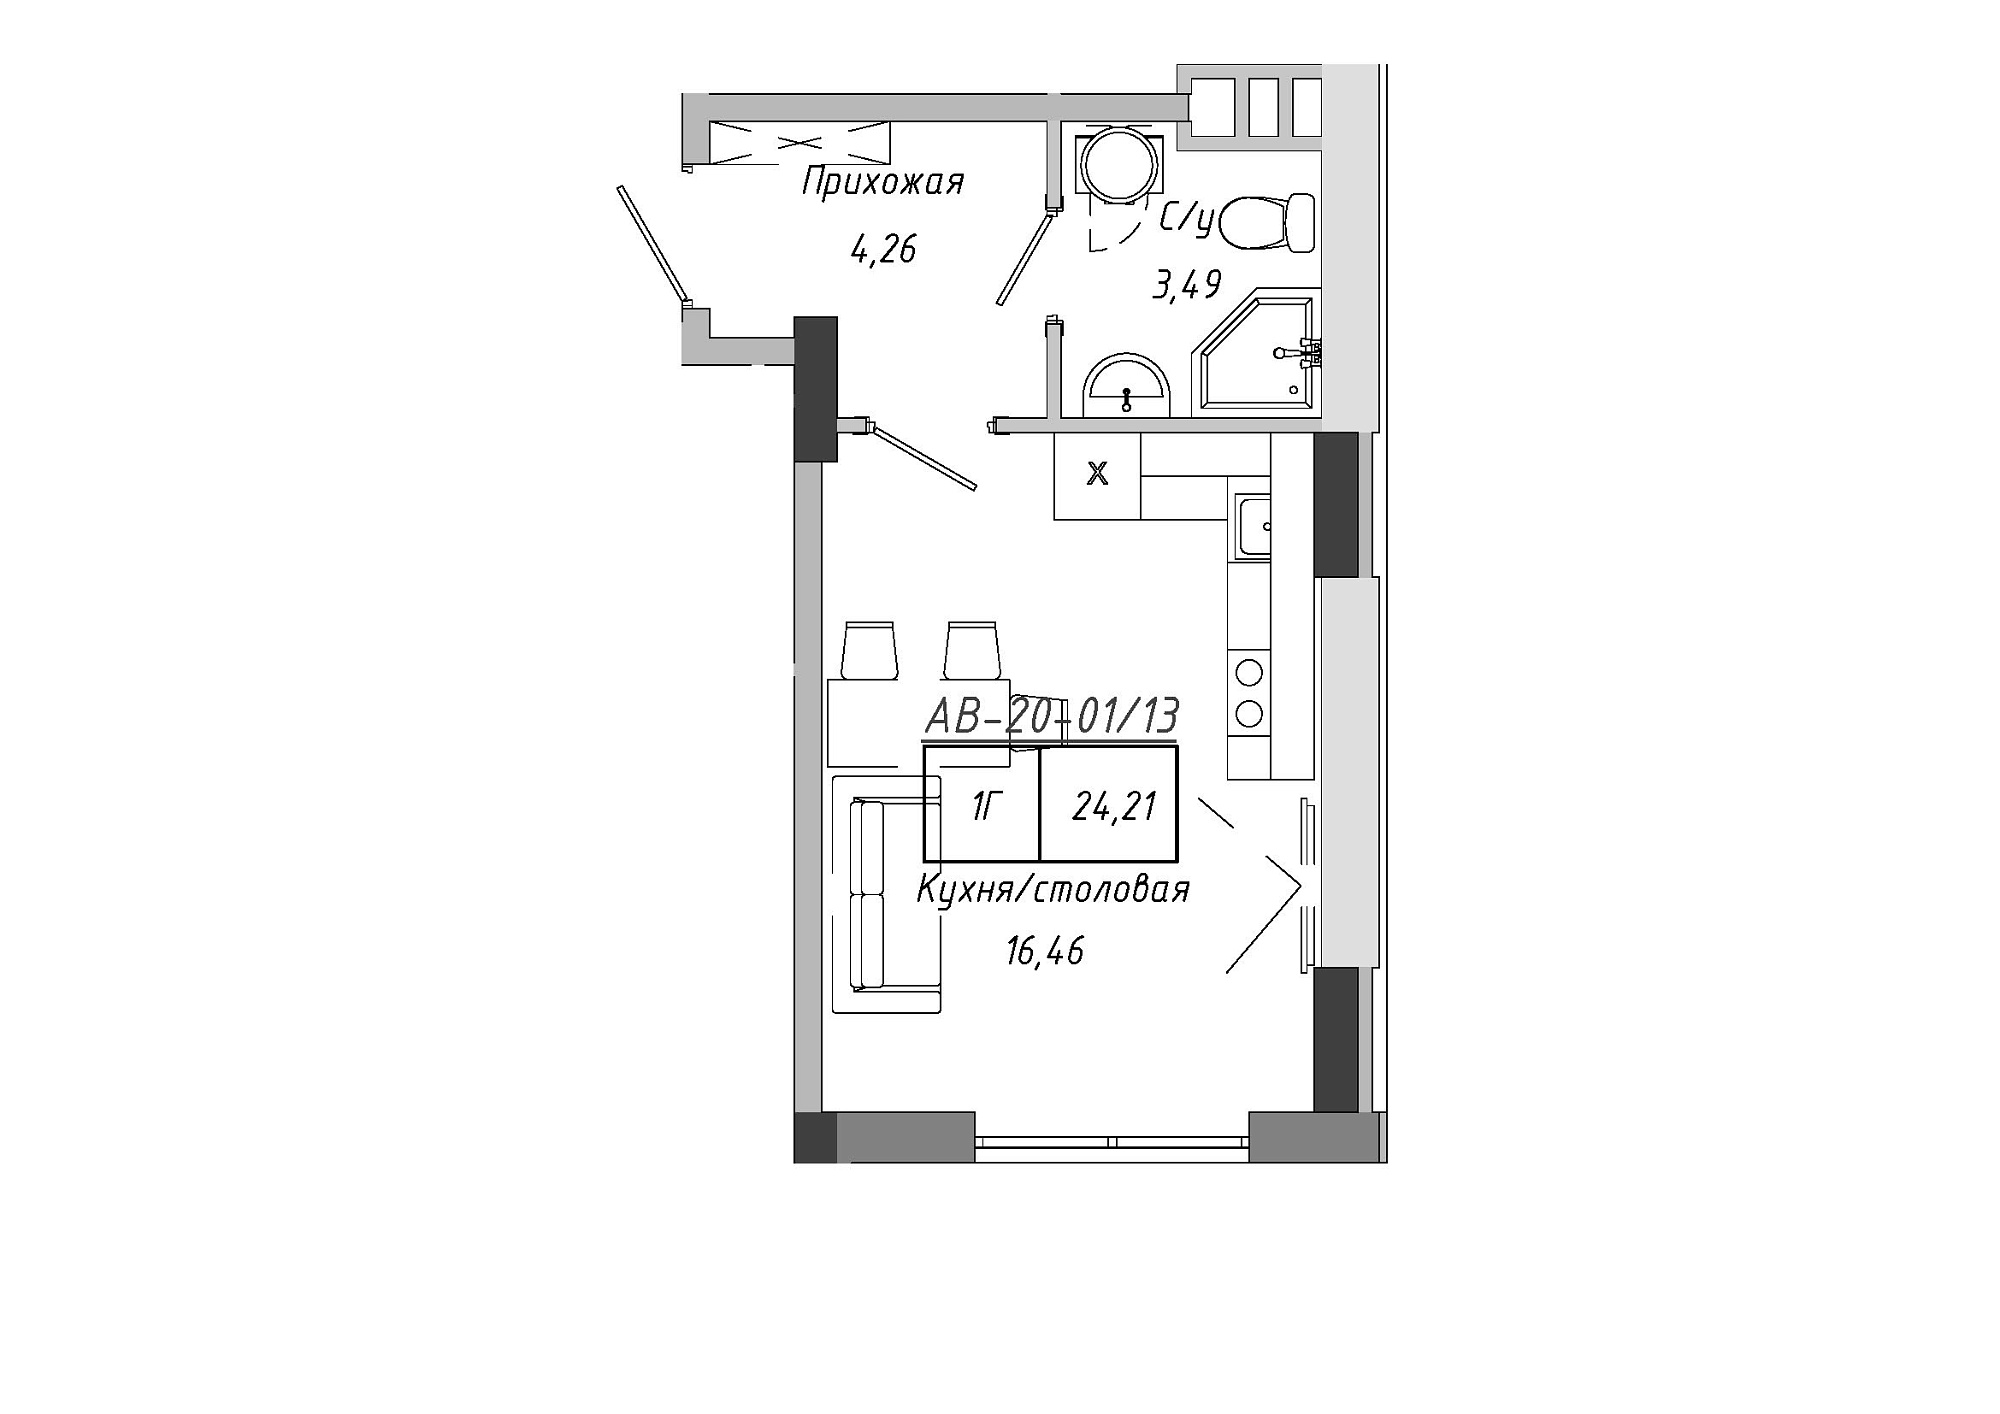 Planning Smart flats area 24.21m2, AB-20-01/00013.